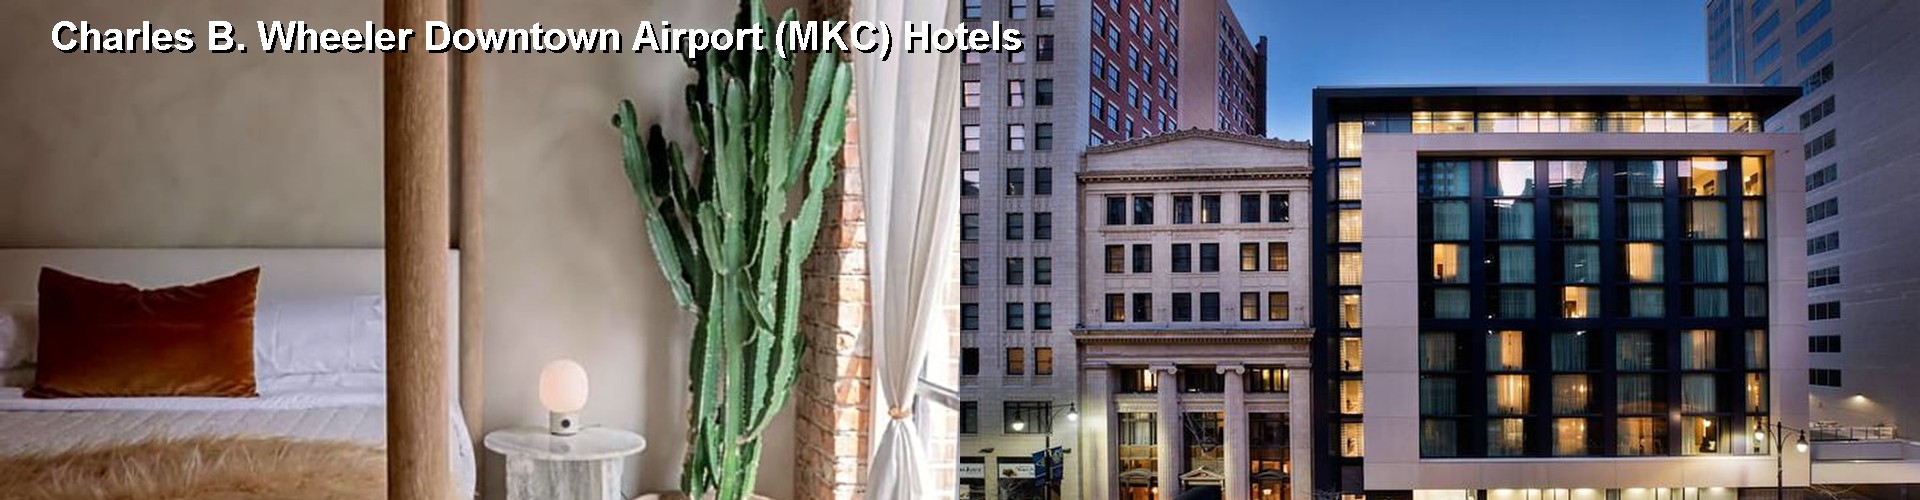 5 Best Hotels near Charles B. Wheeler Downtown Airport (MKC)